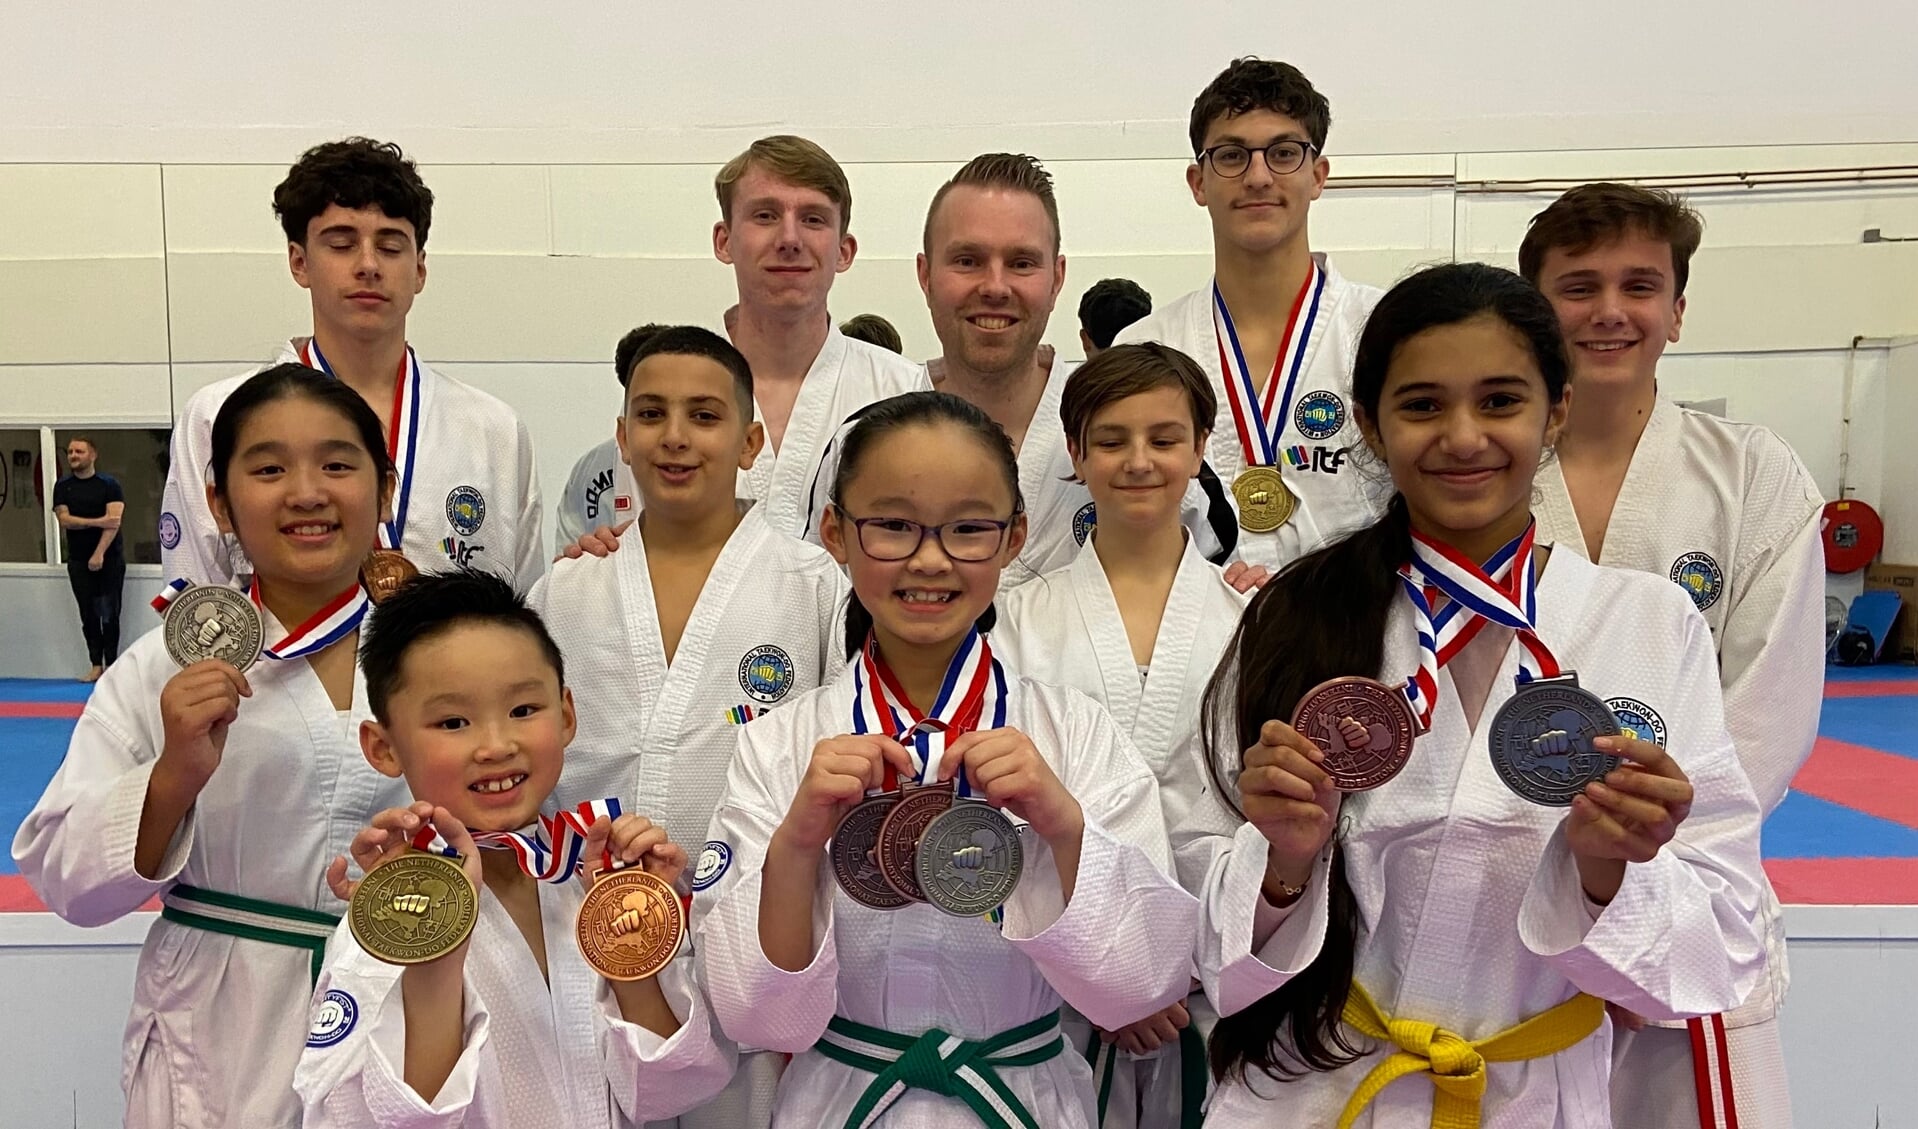 Nieuwegeins succes op NK taekwondo in Best: maar liefst 14 medailles.